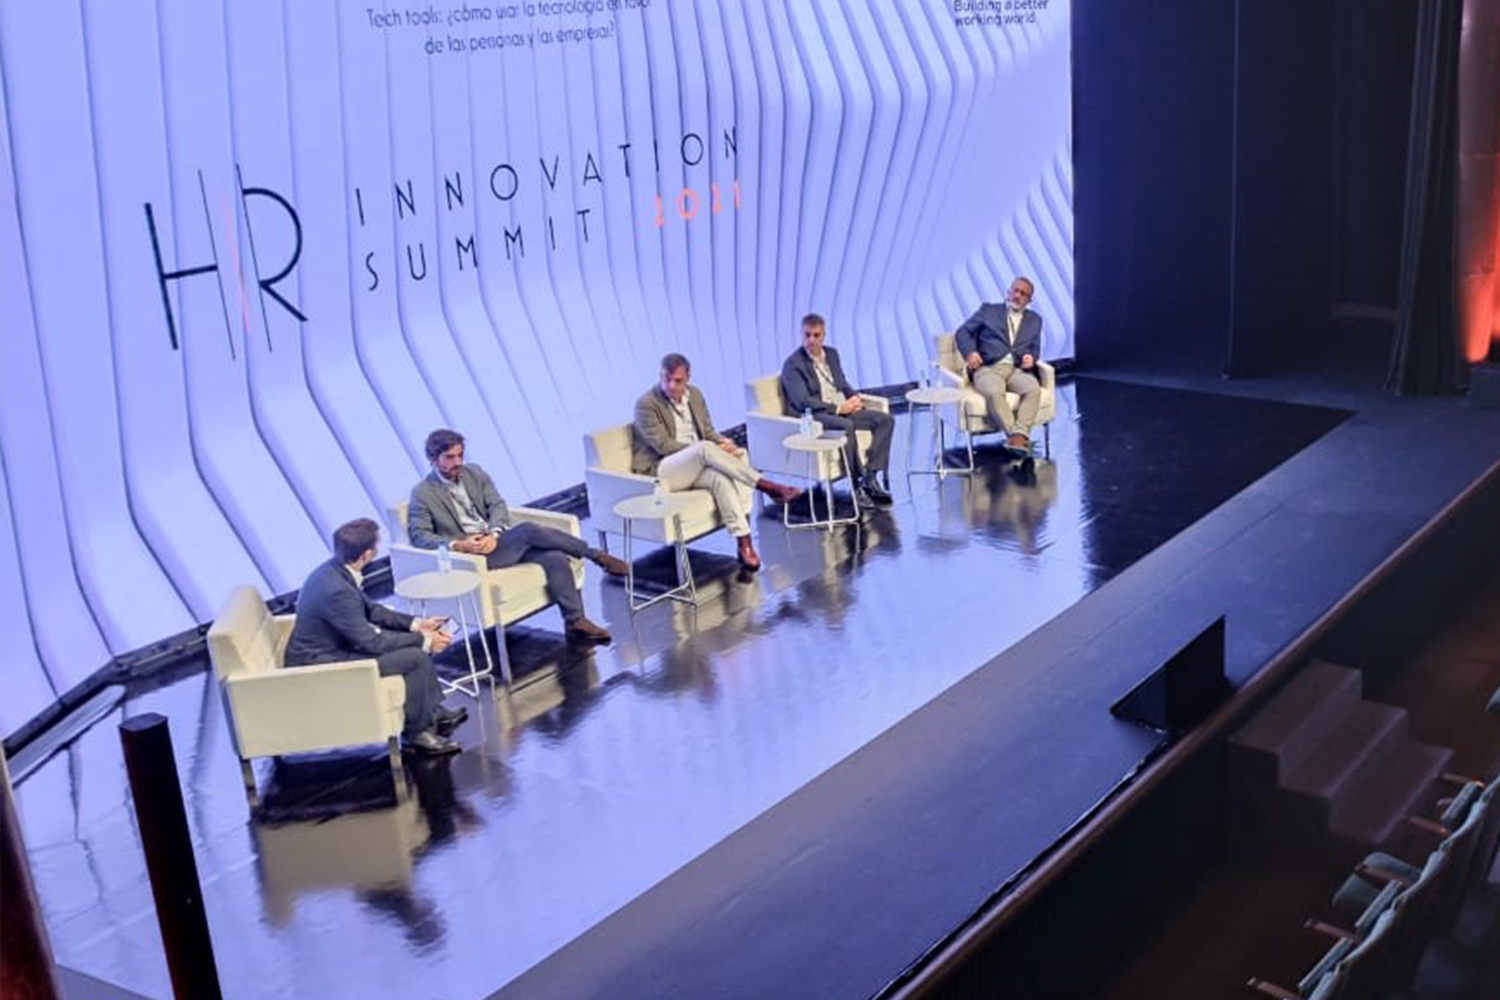 HR Innovation Summit 2021_3